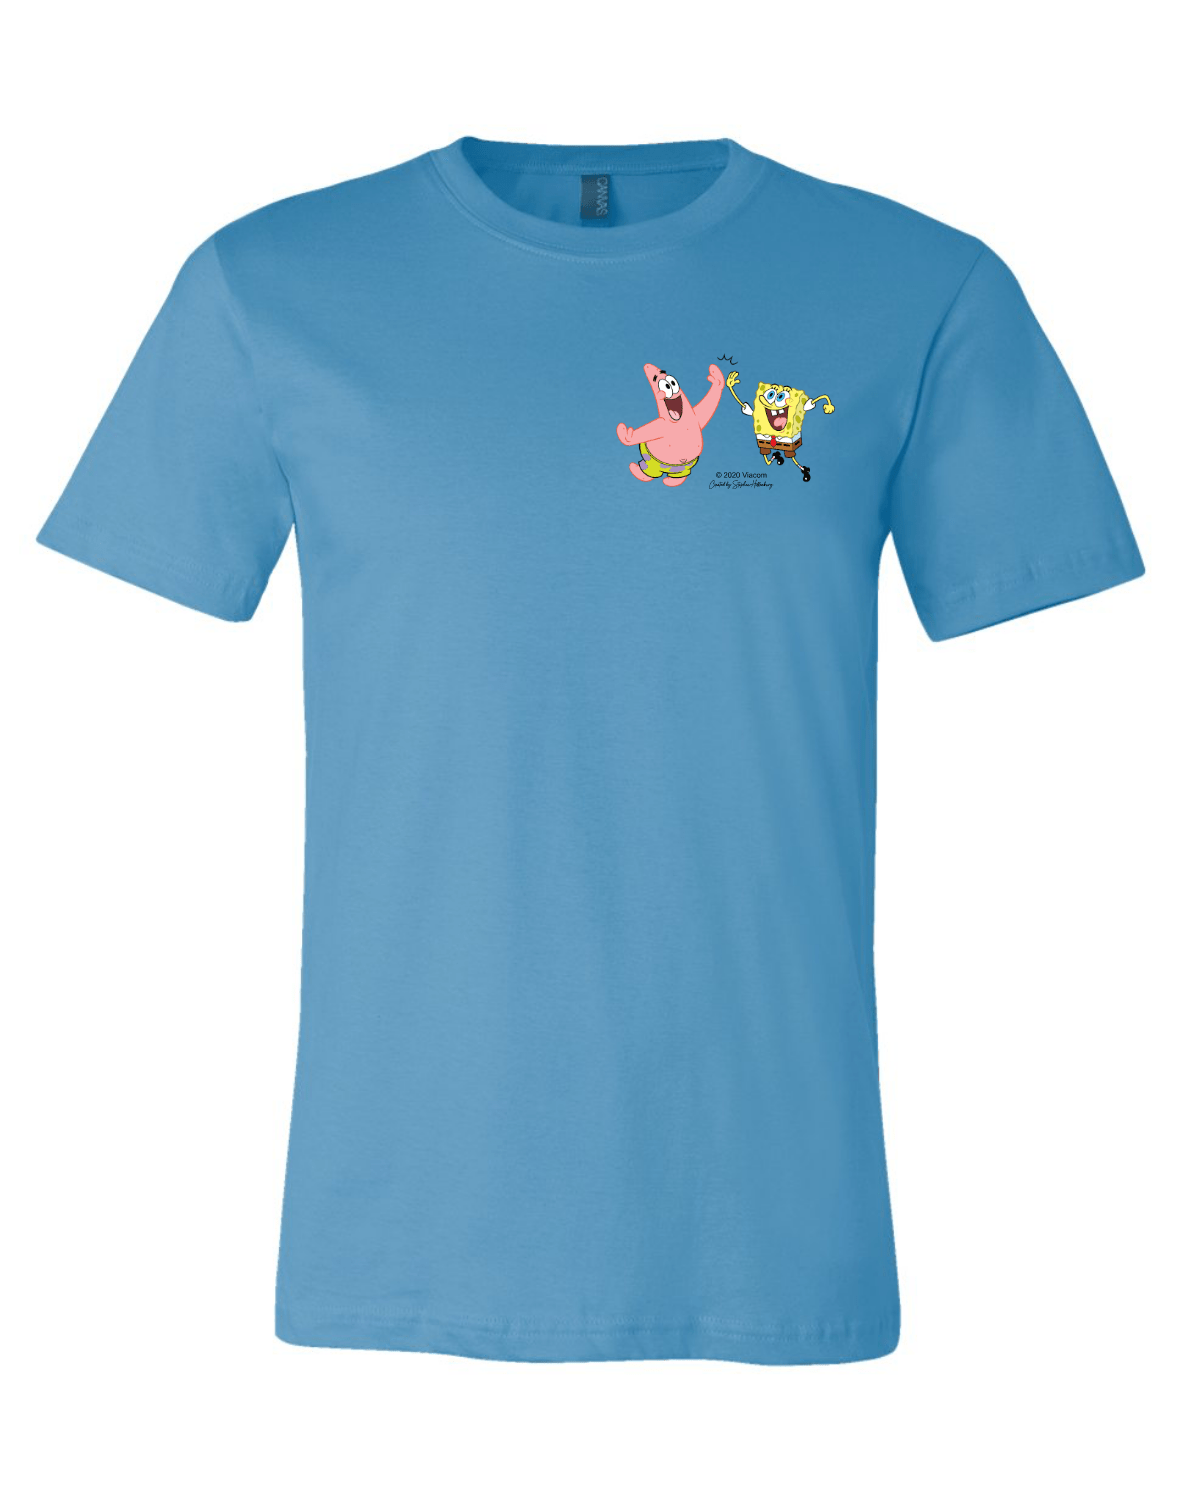 SpongeBob SquarePants Do Stuff Together Pastel Short Sleeve T - Shirt - Paramount Shop